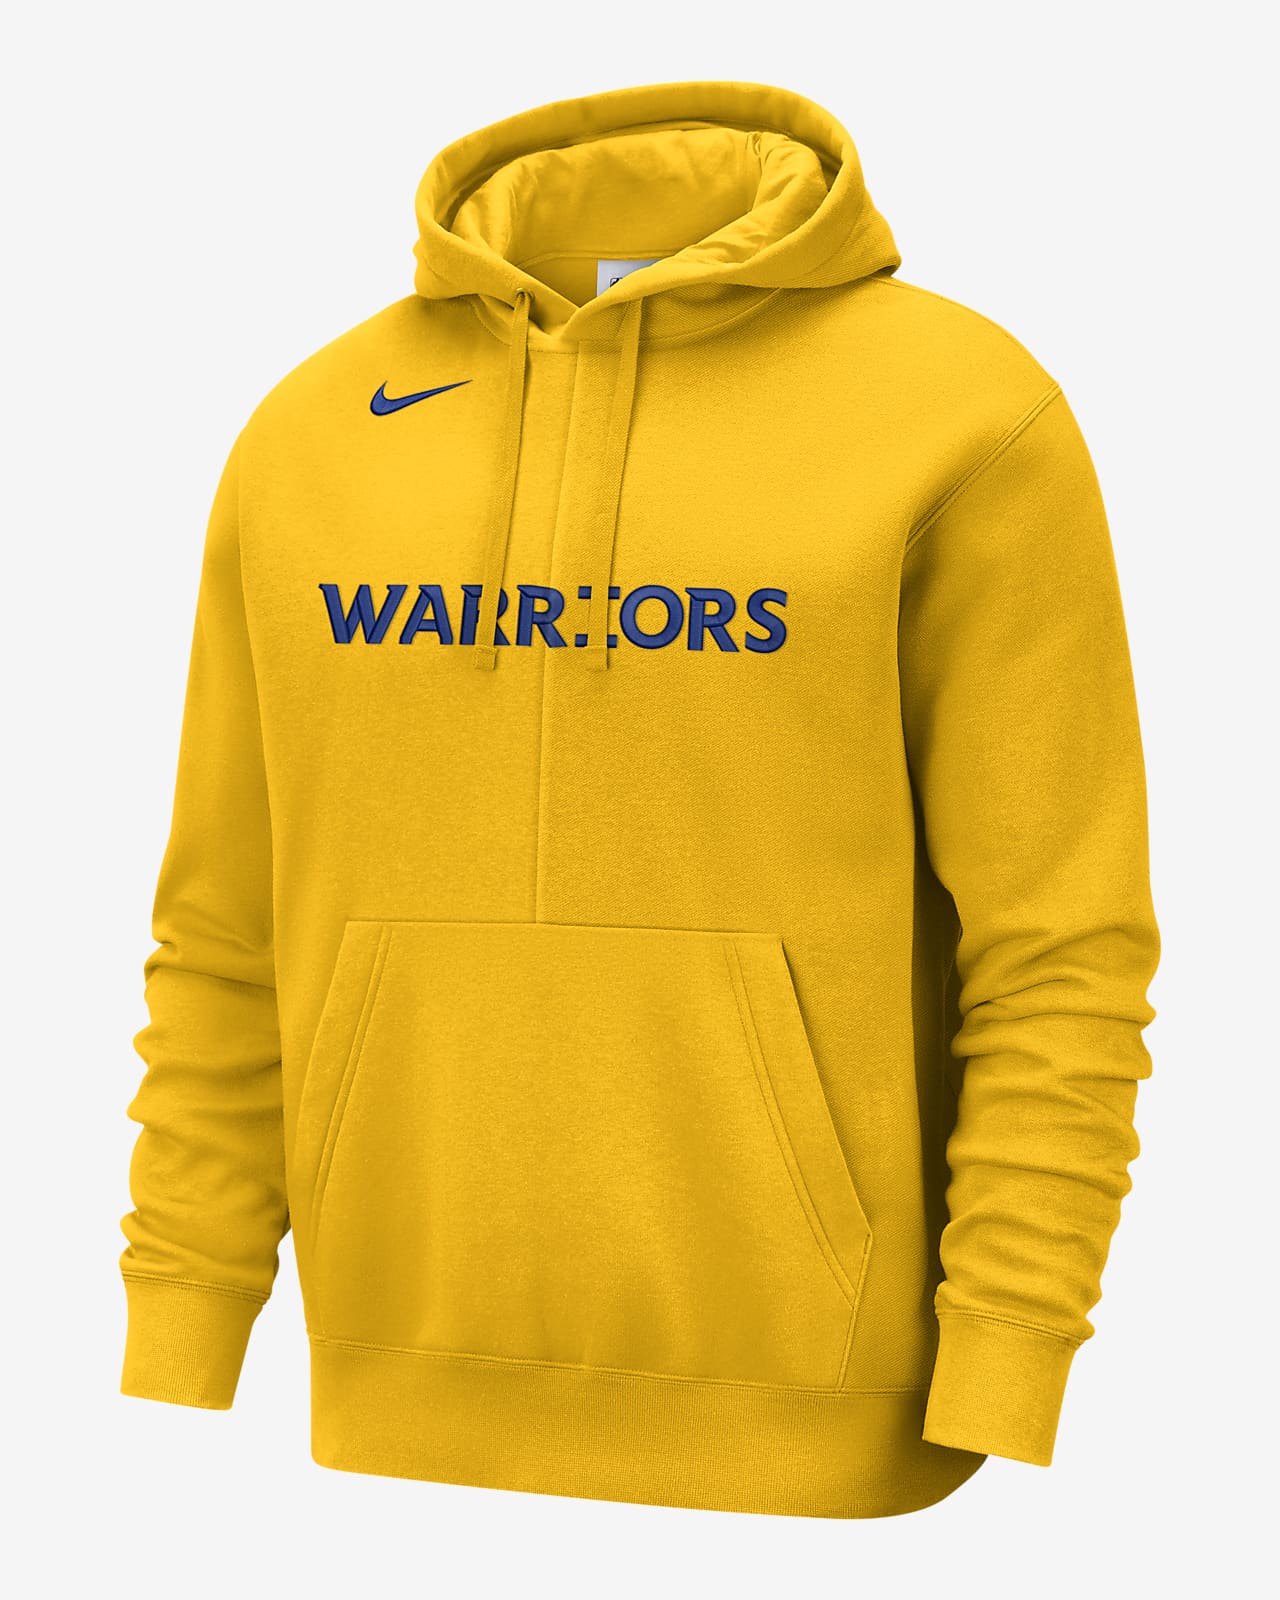 Golden State Warriors Courtside con capucha tejido Fleece de la NBA - Hombre. Nike ES